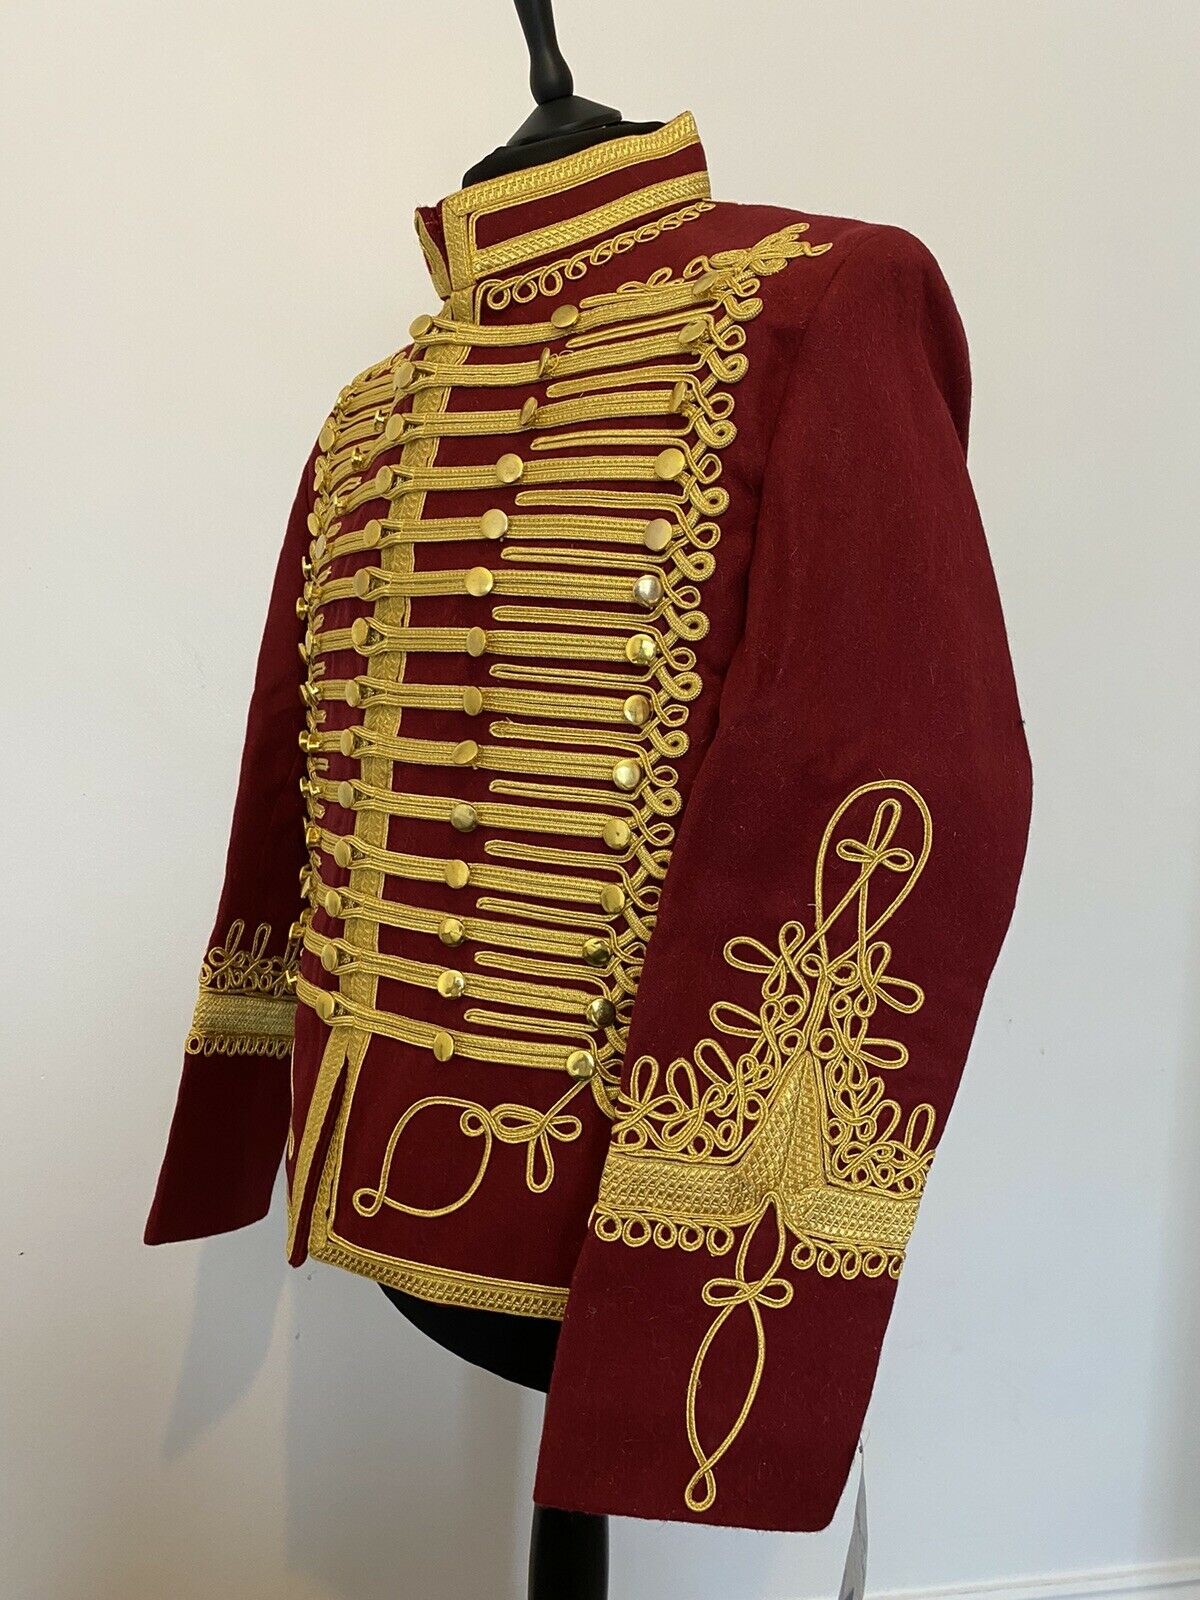 Red Napoleonic Military Style Tunic pelisse Jimmie Hendrix Uniform Hussar Jacket